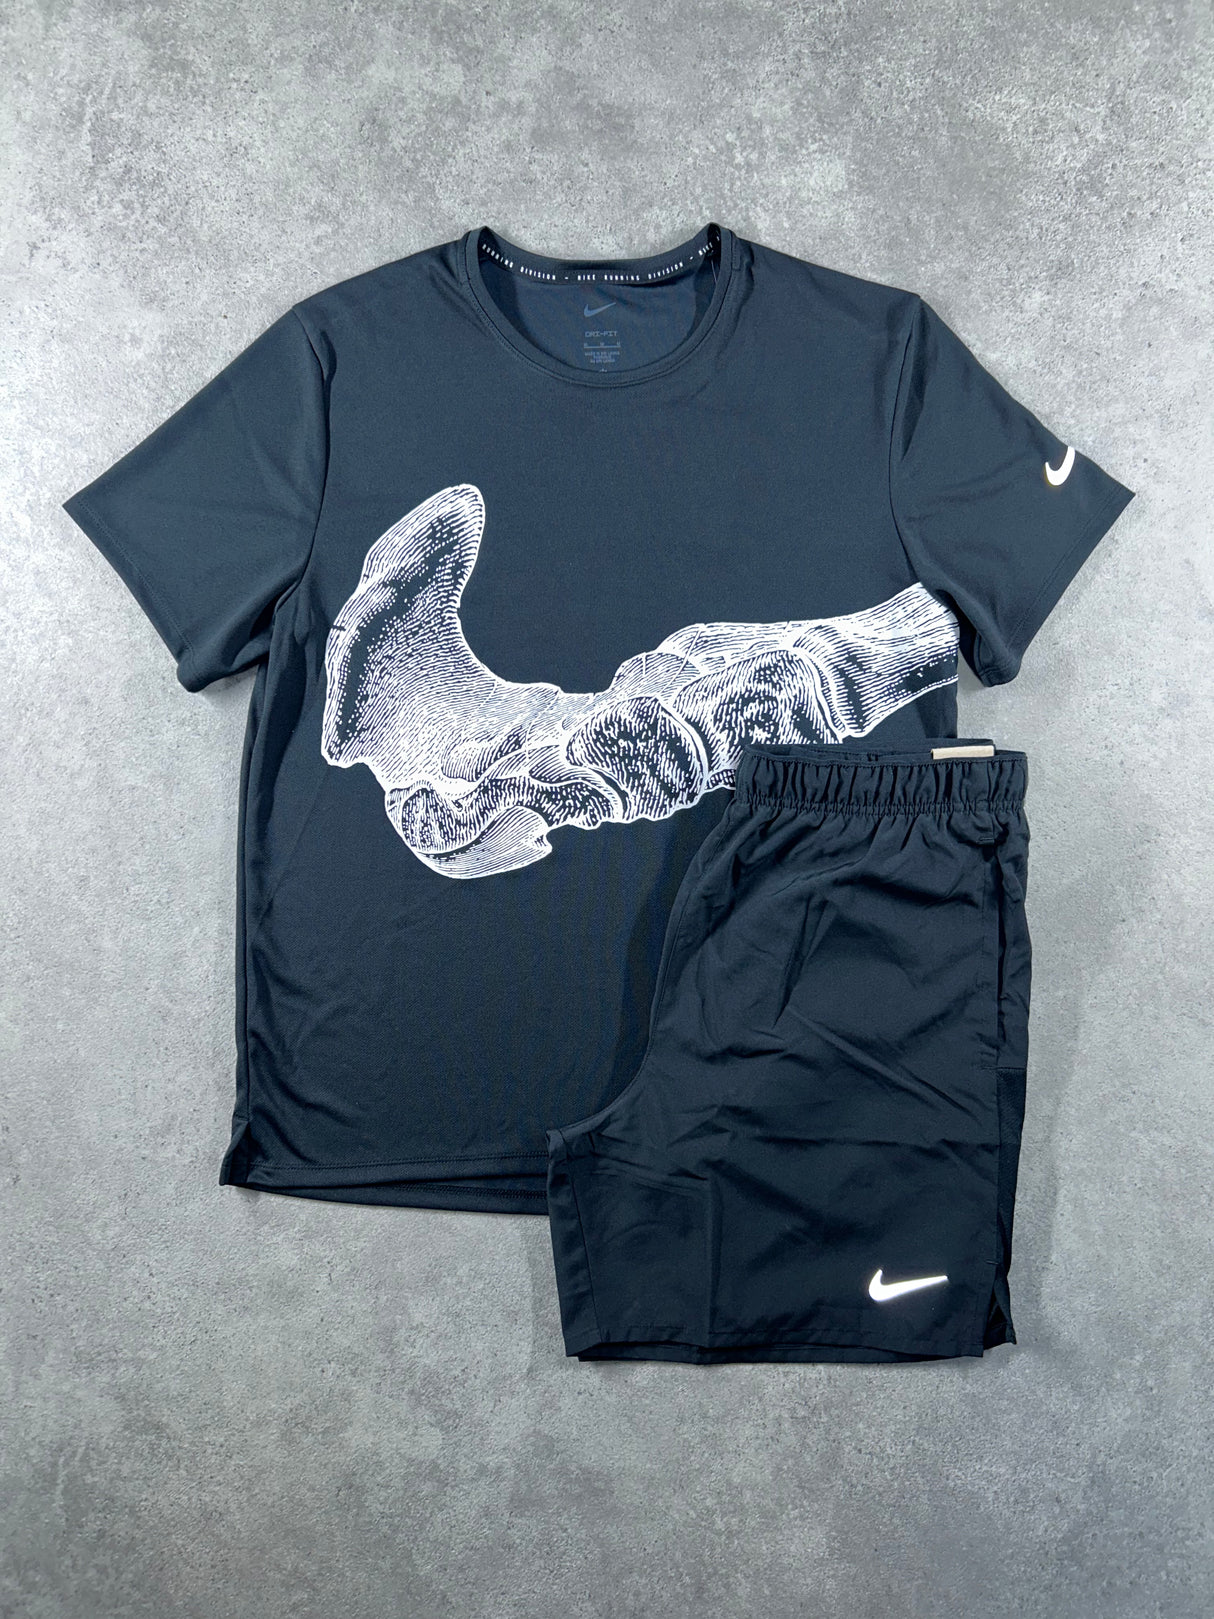 Nike - Dri Fit Run Division Set - Black/Silver